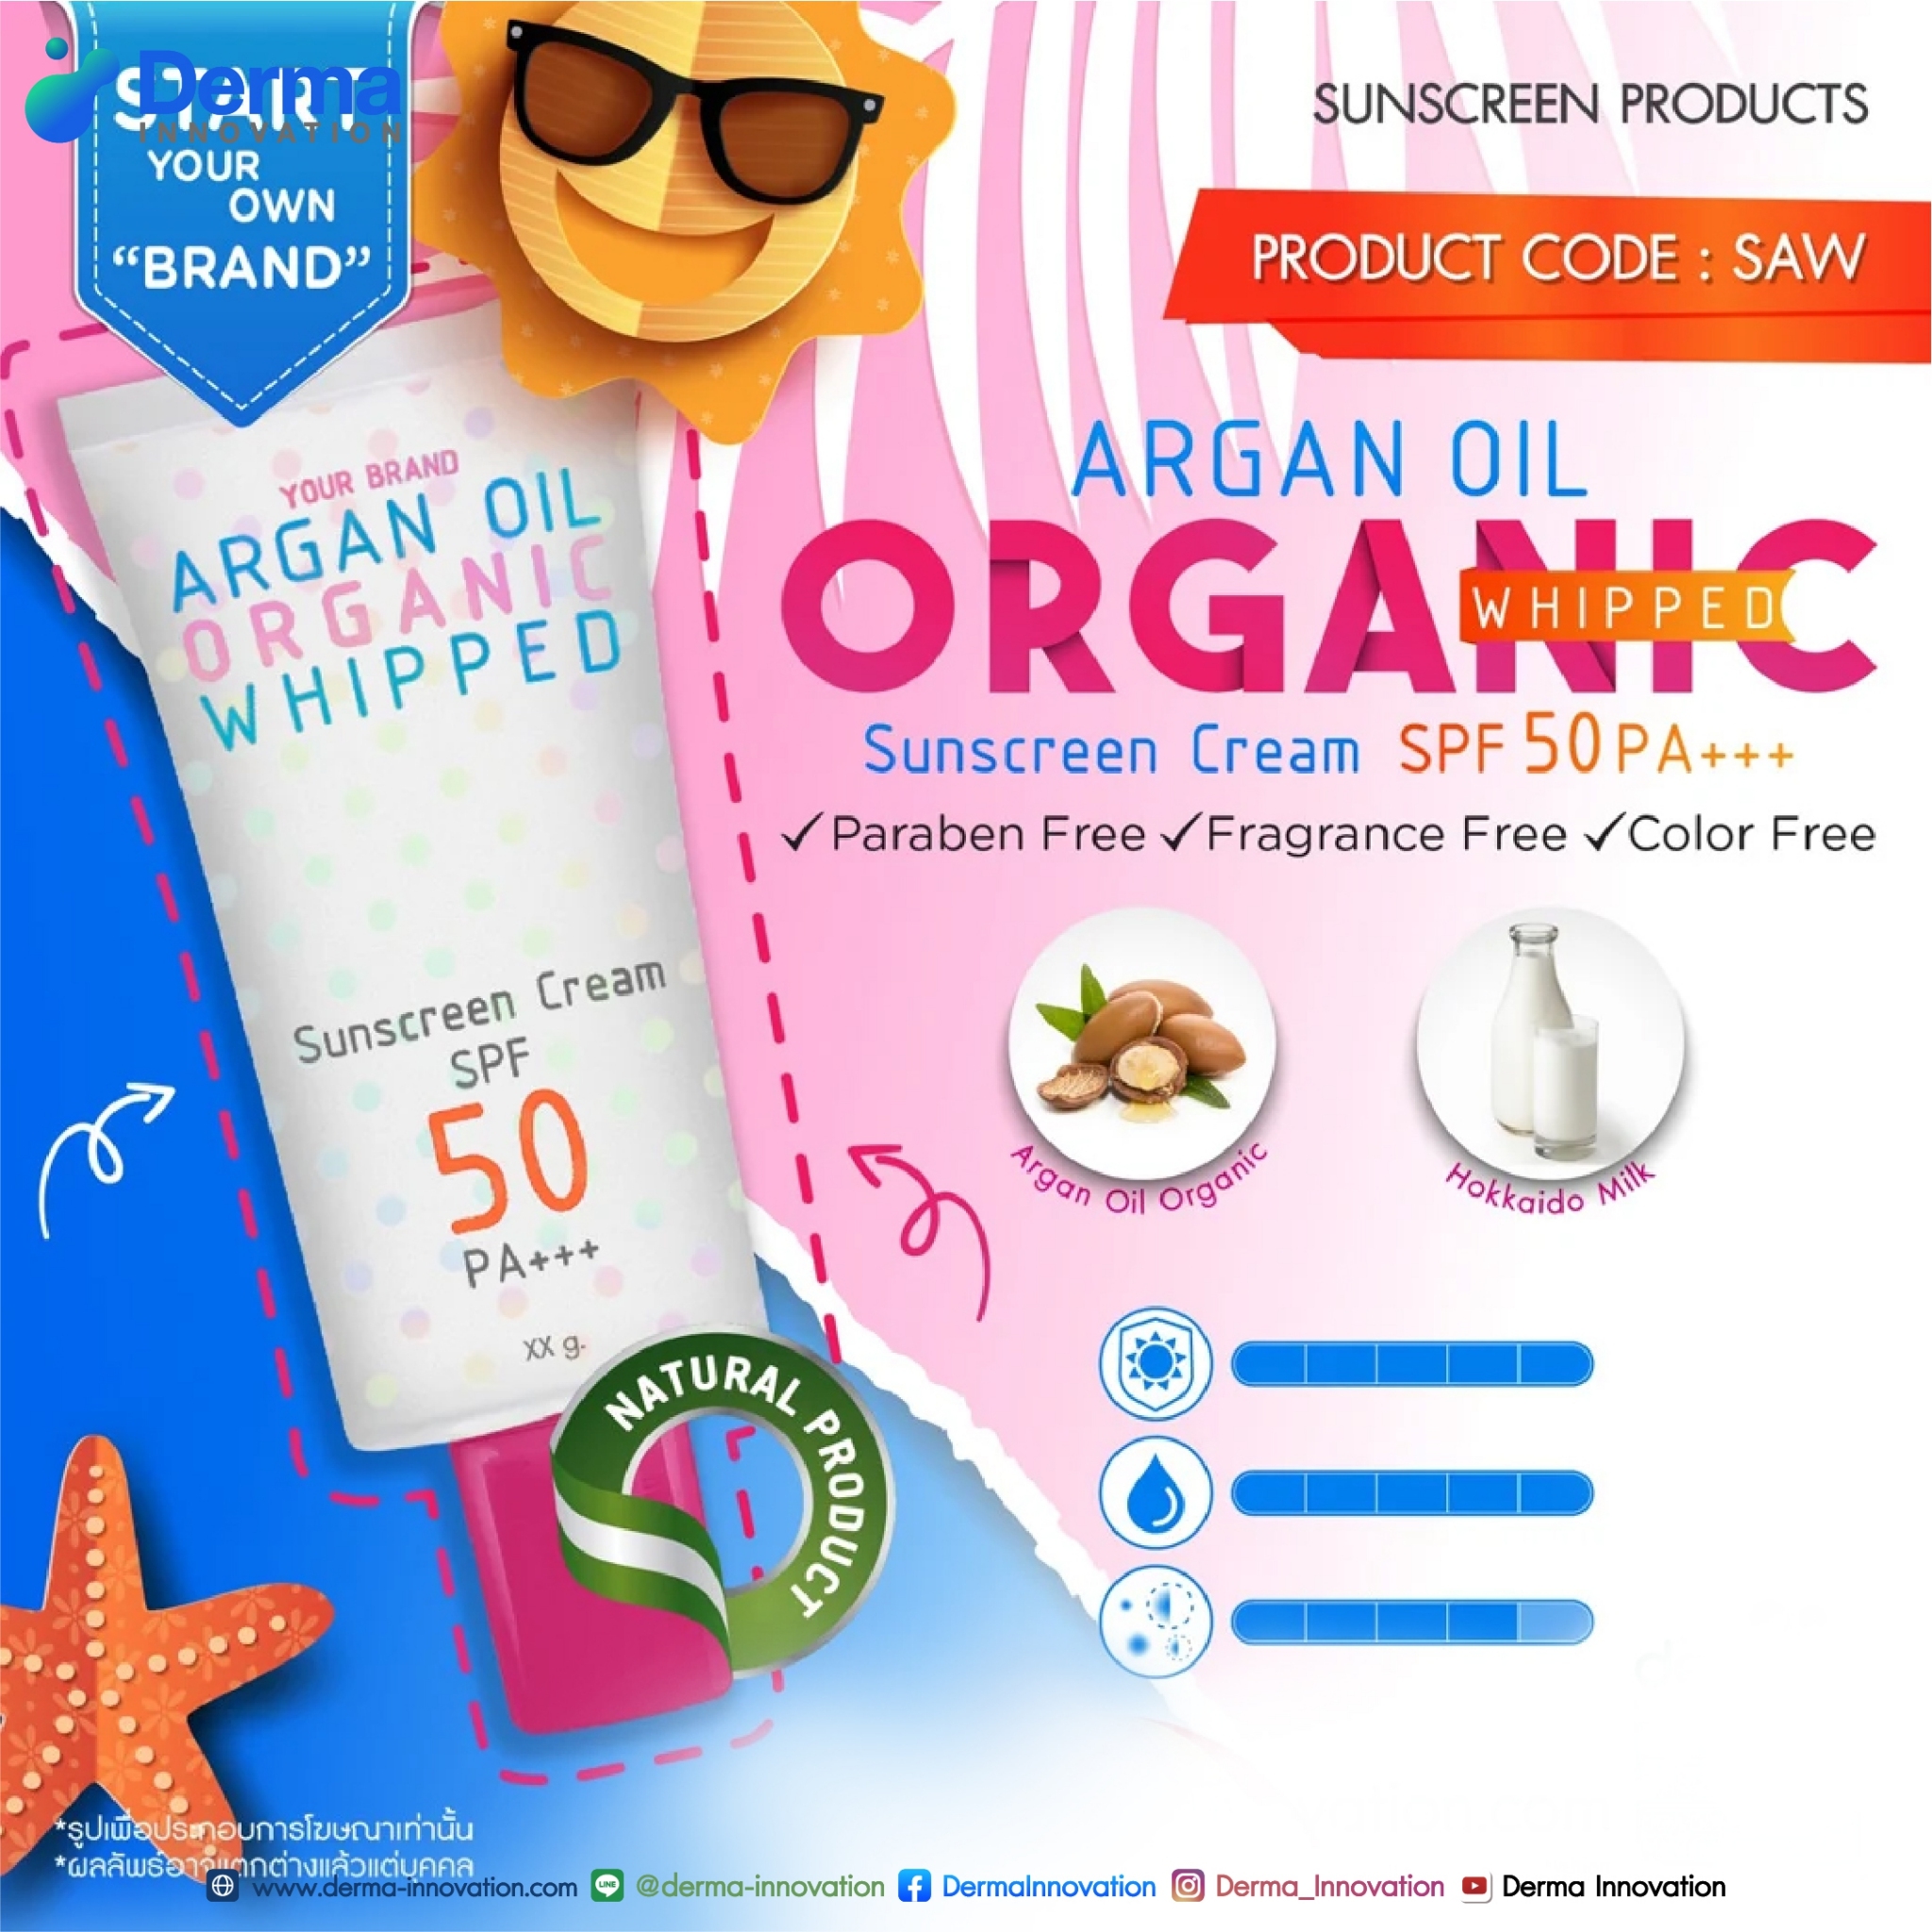 Argan Oil Organic Whipped Sunscreen Cream SPF 50 PA+++